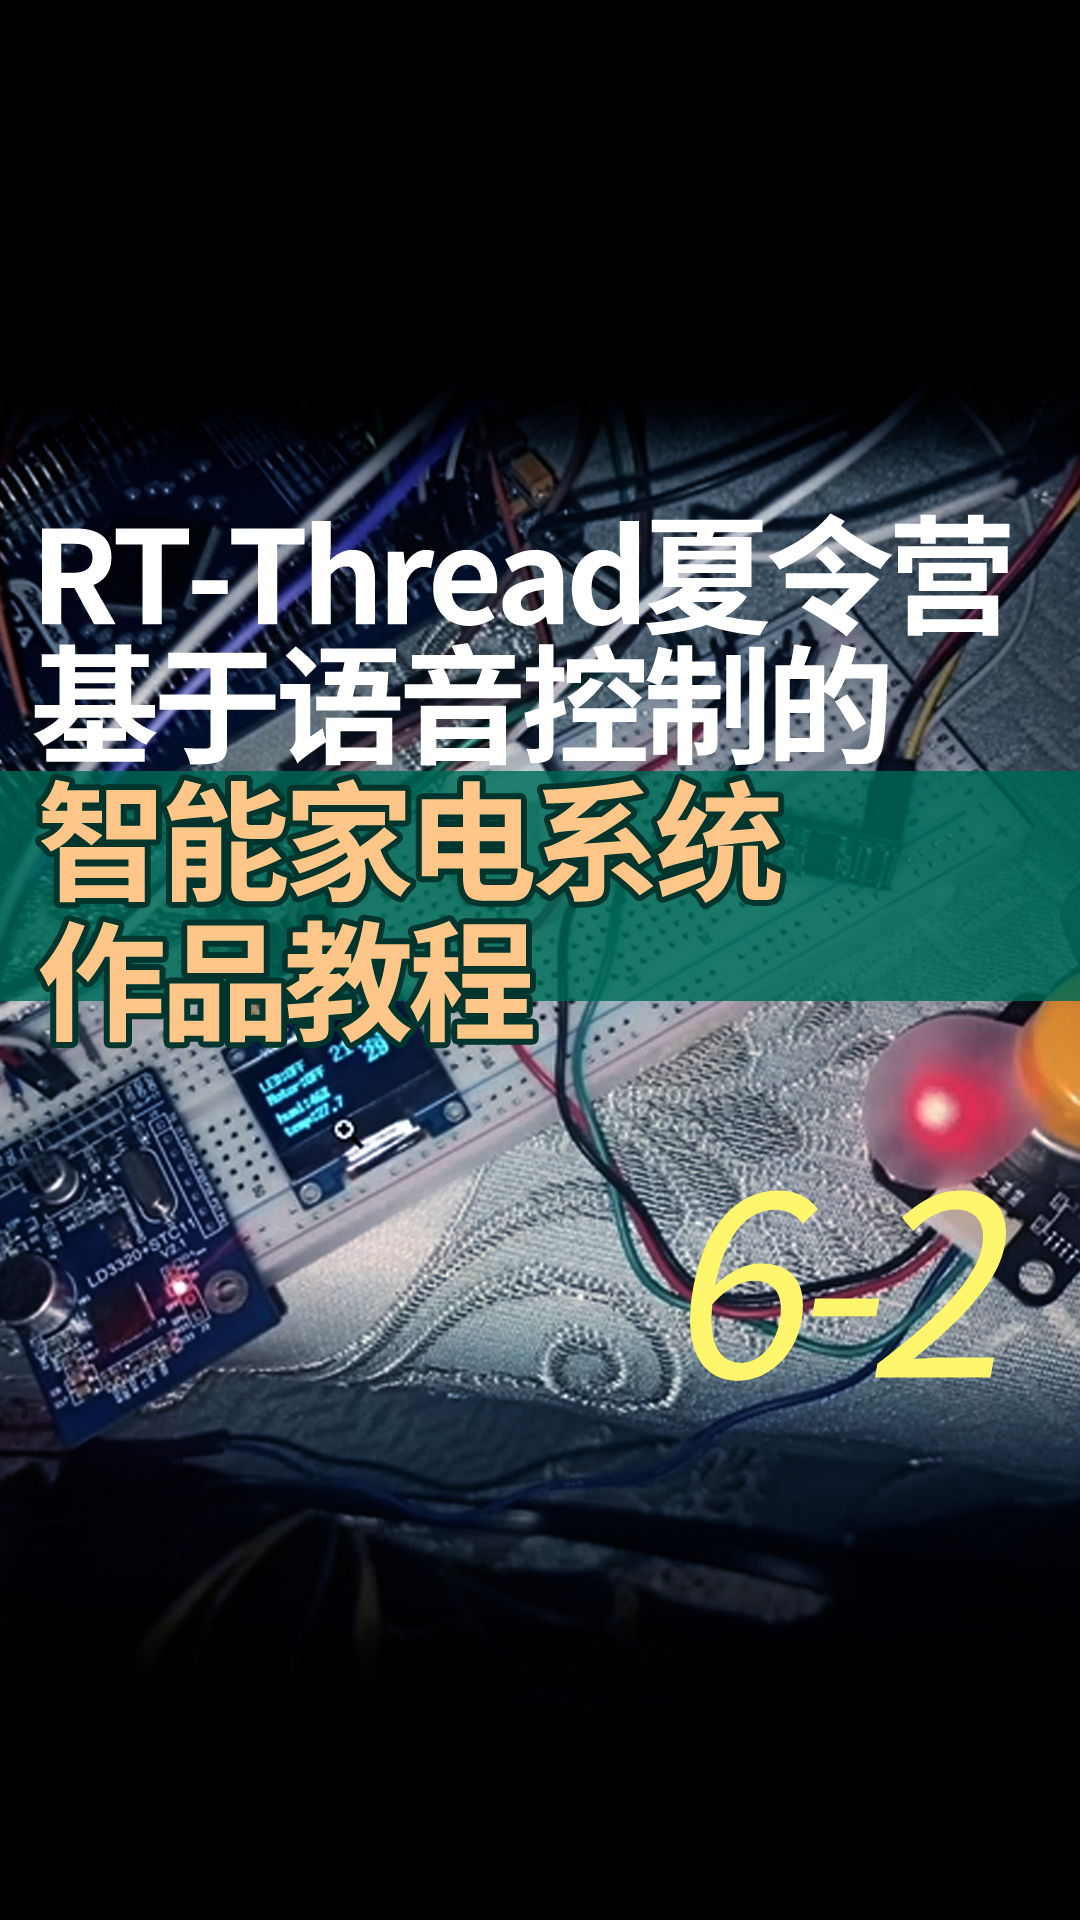 RT-Thread夏令營基于語音控制的智能家電系統作品教程 6-2程序完善